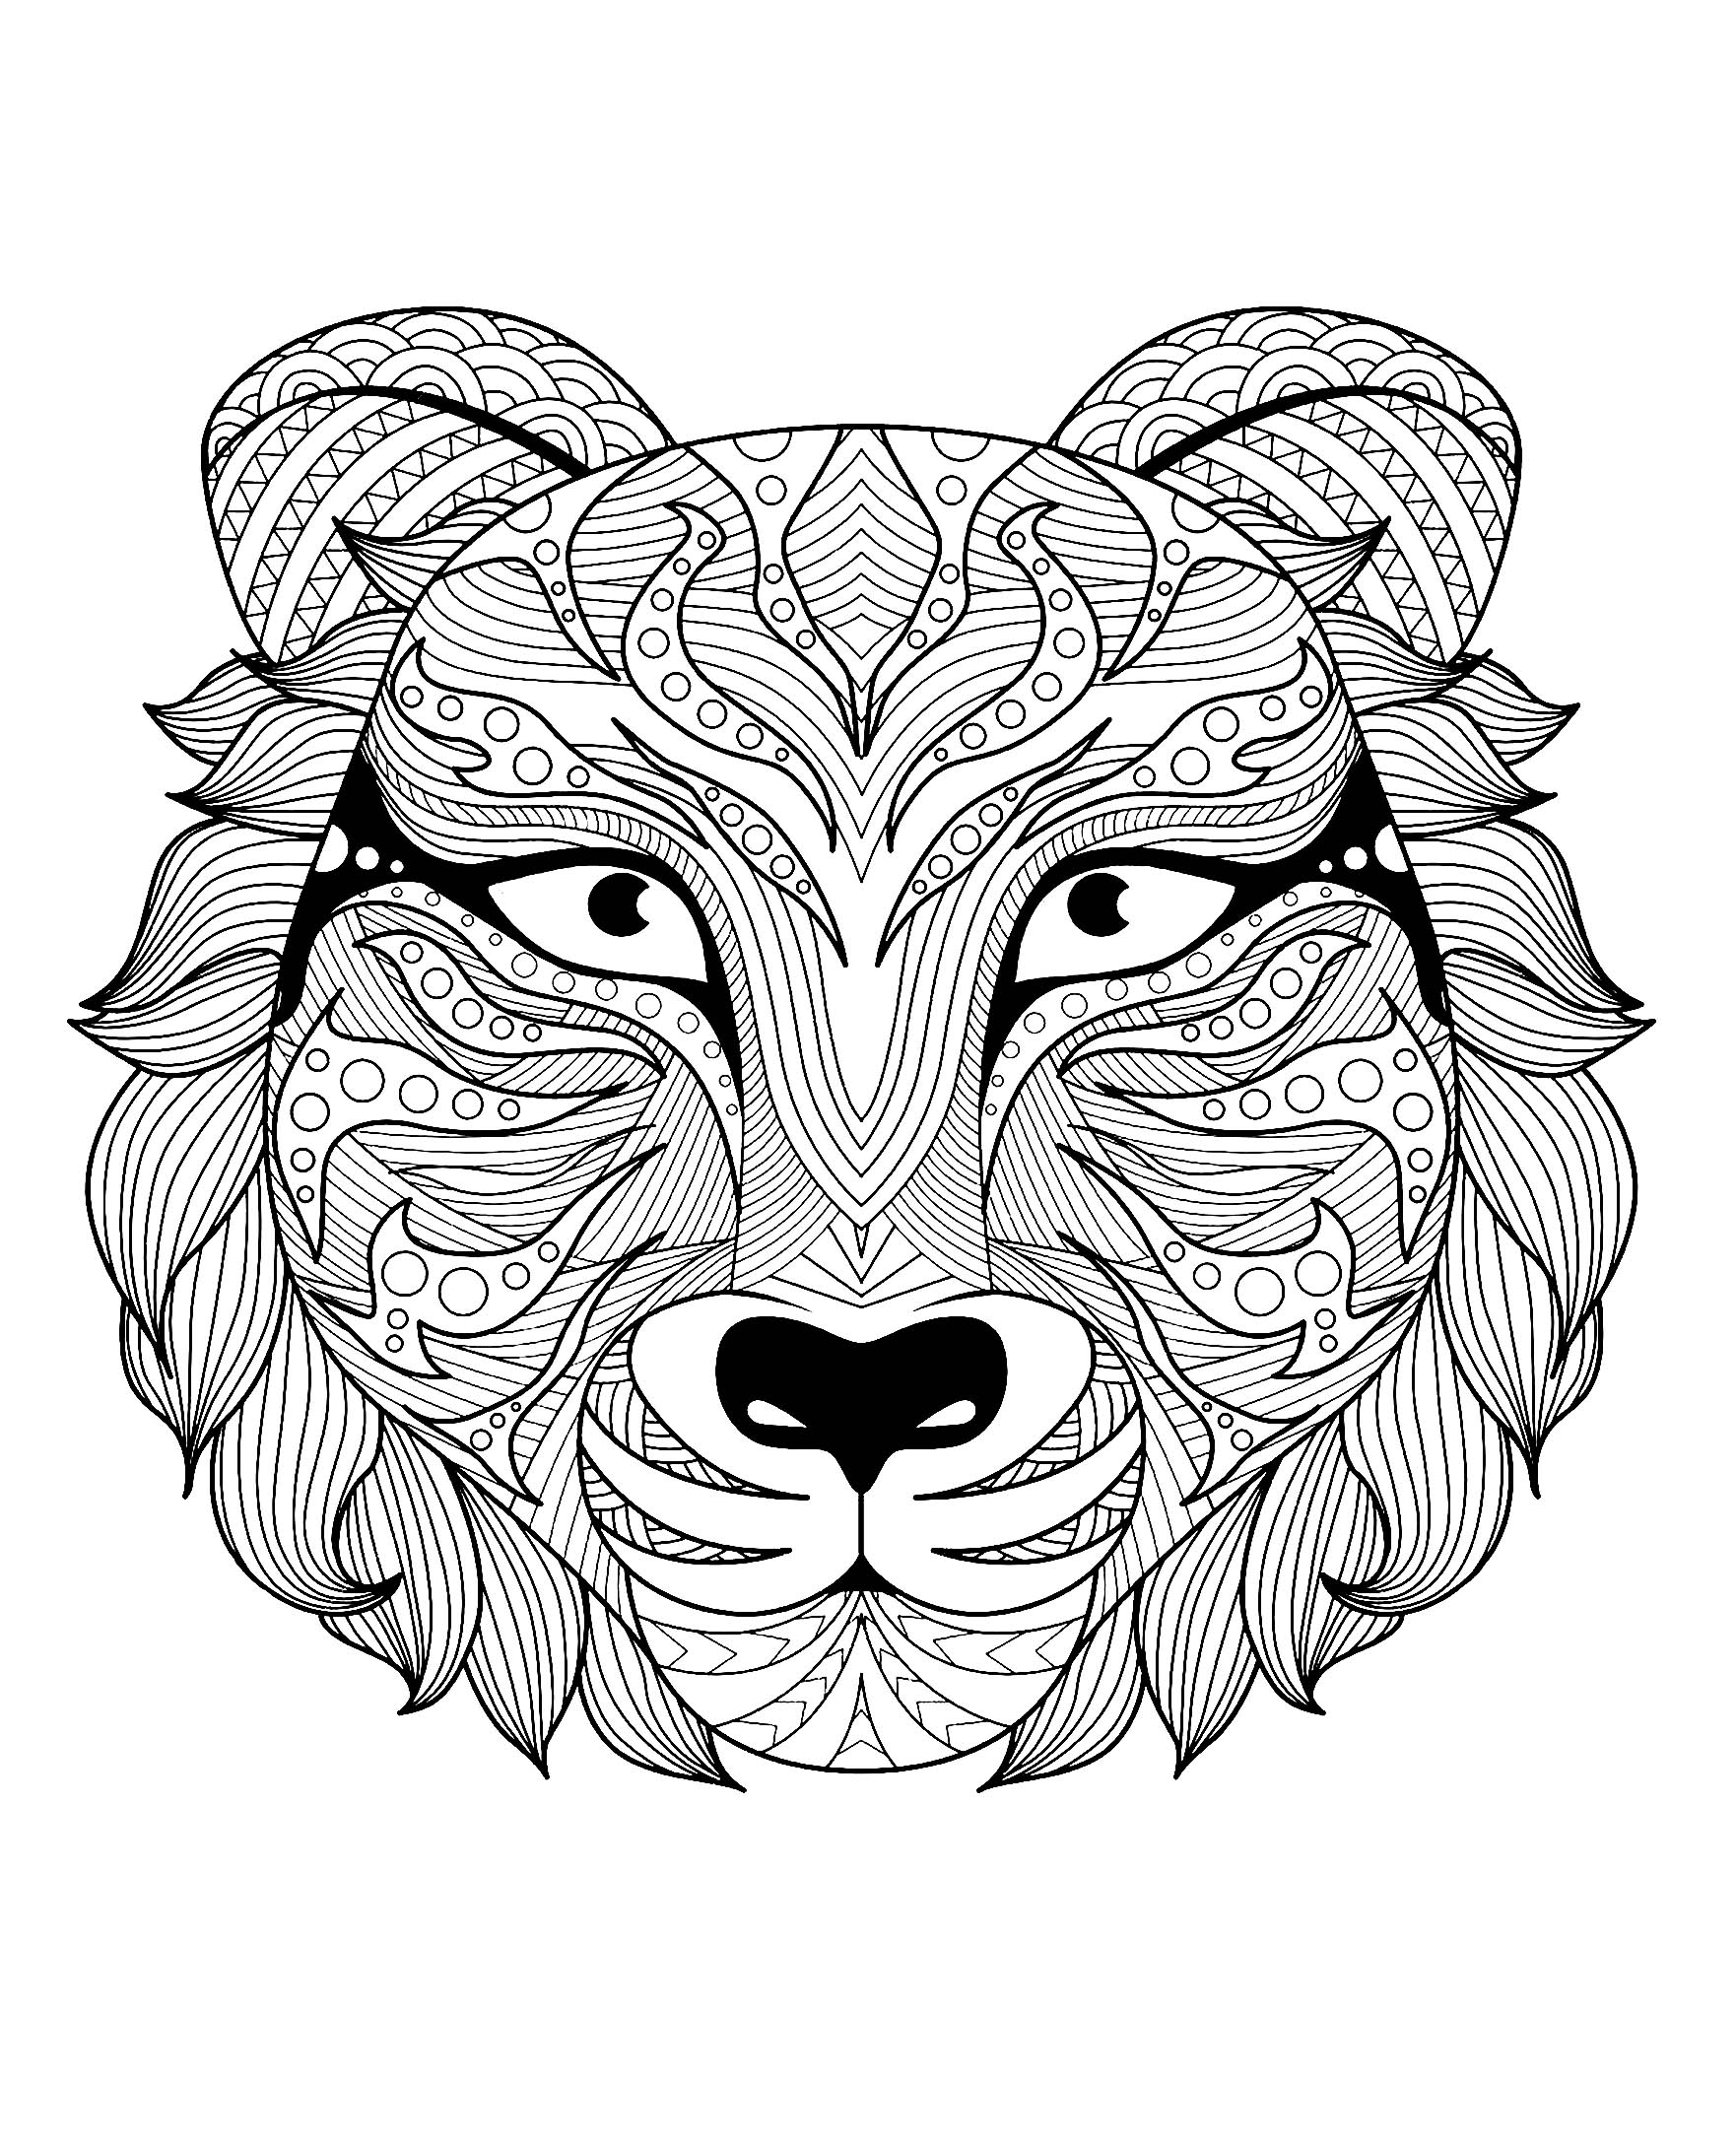 Magnífica cabeça de tigre, Artista : Bimdeedee   Fonte : 123rf